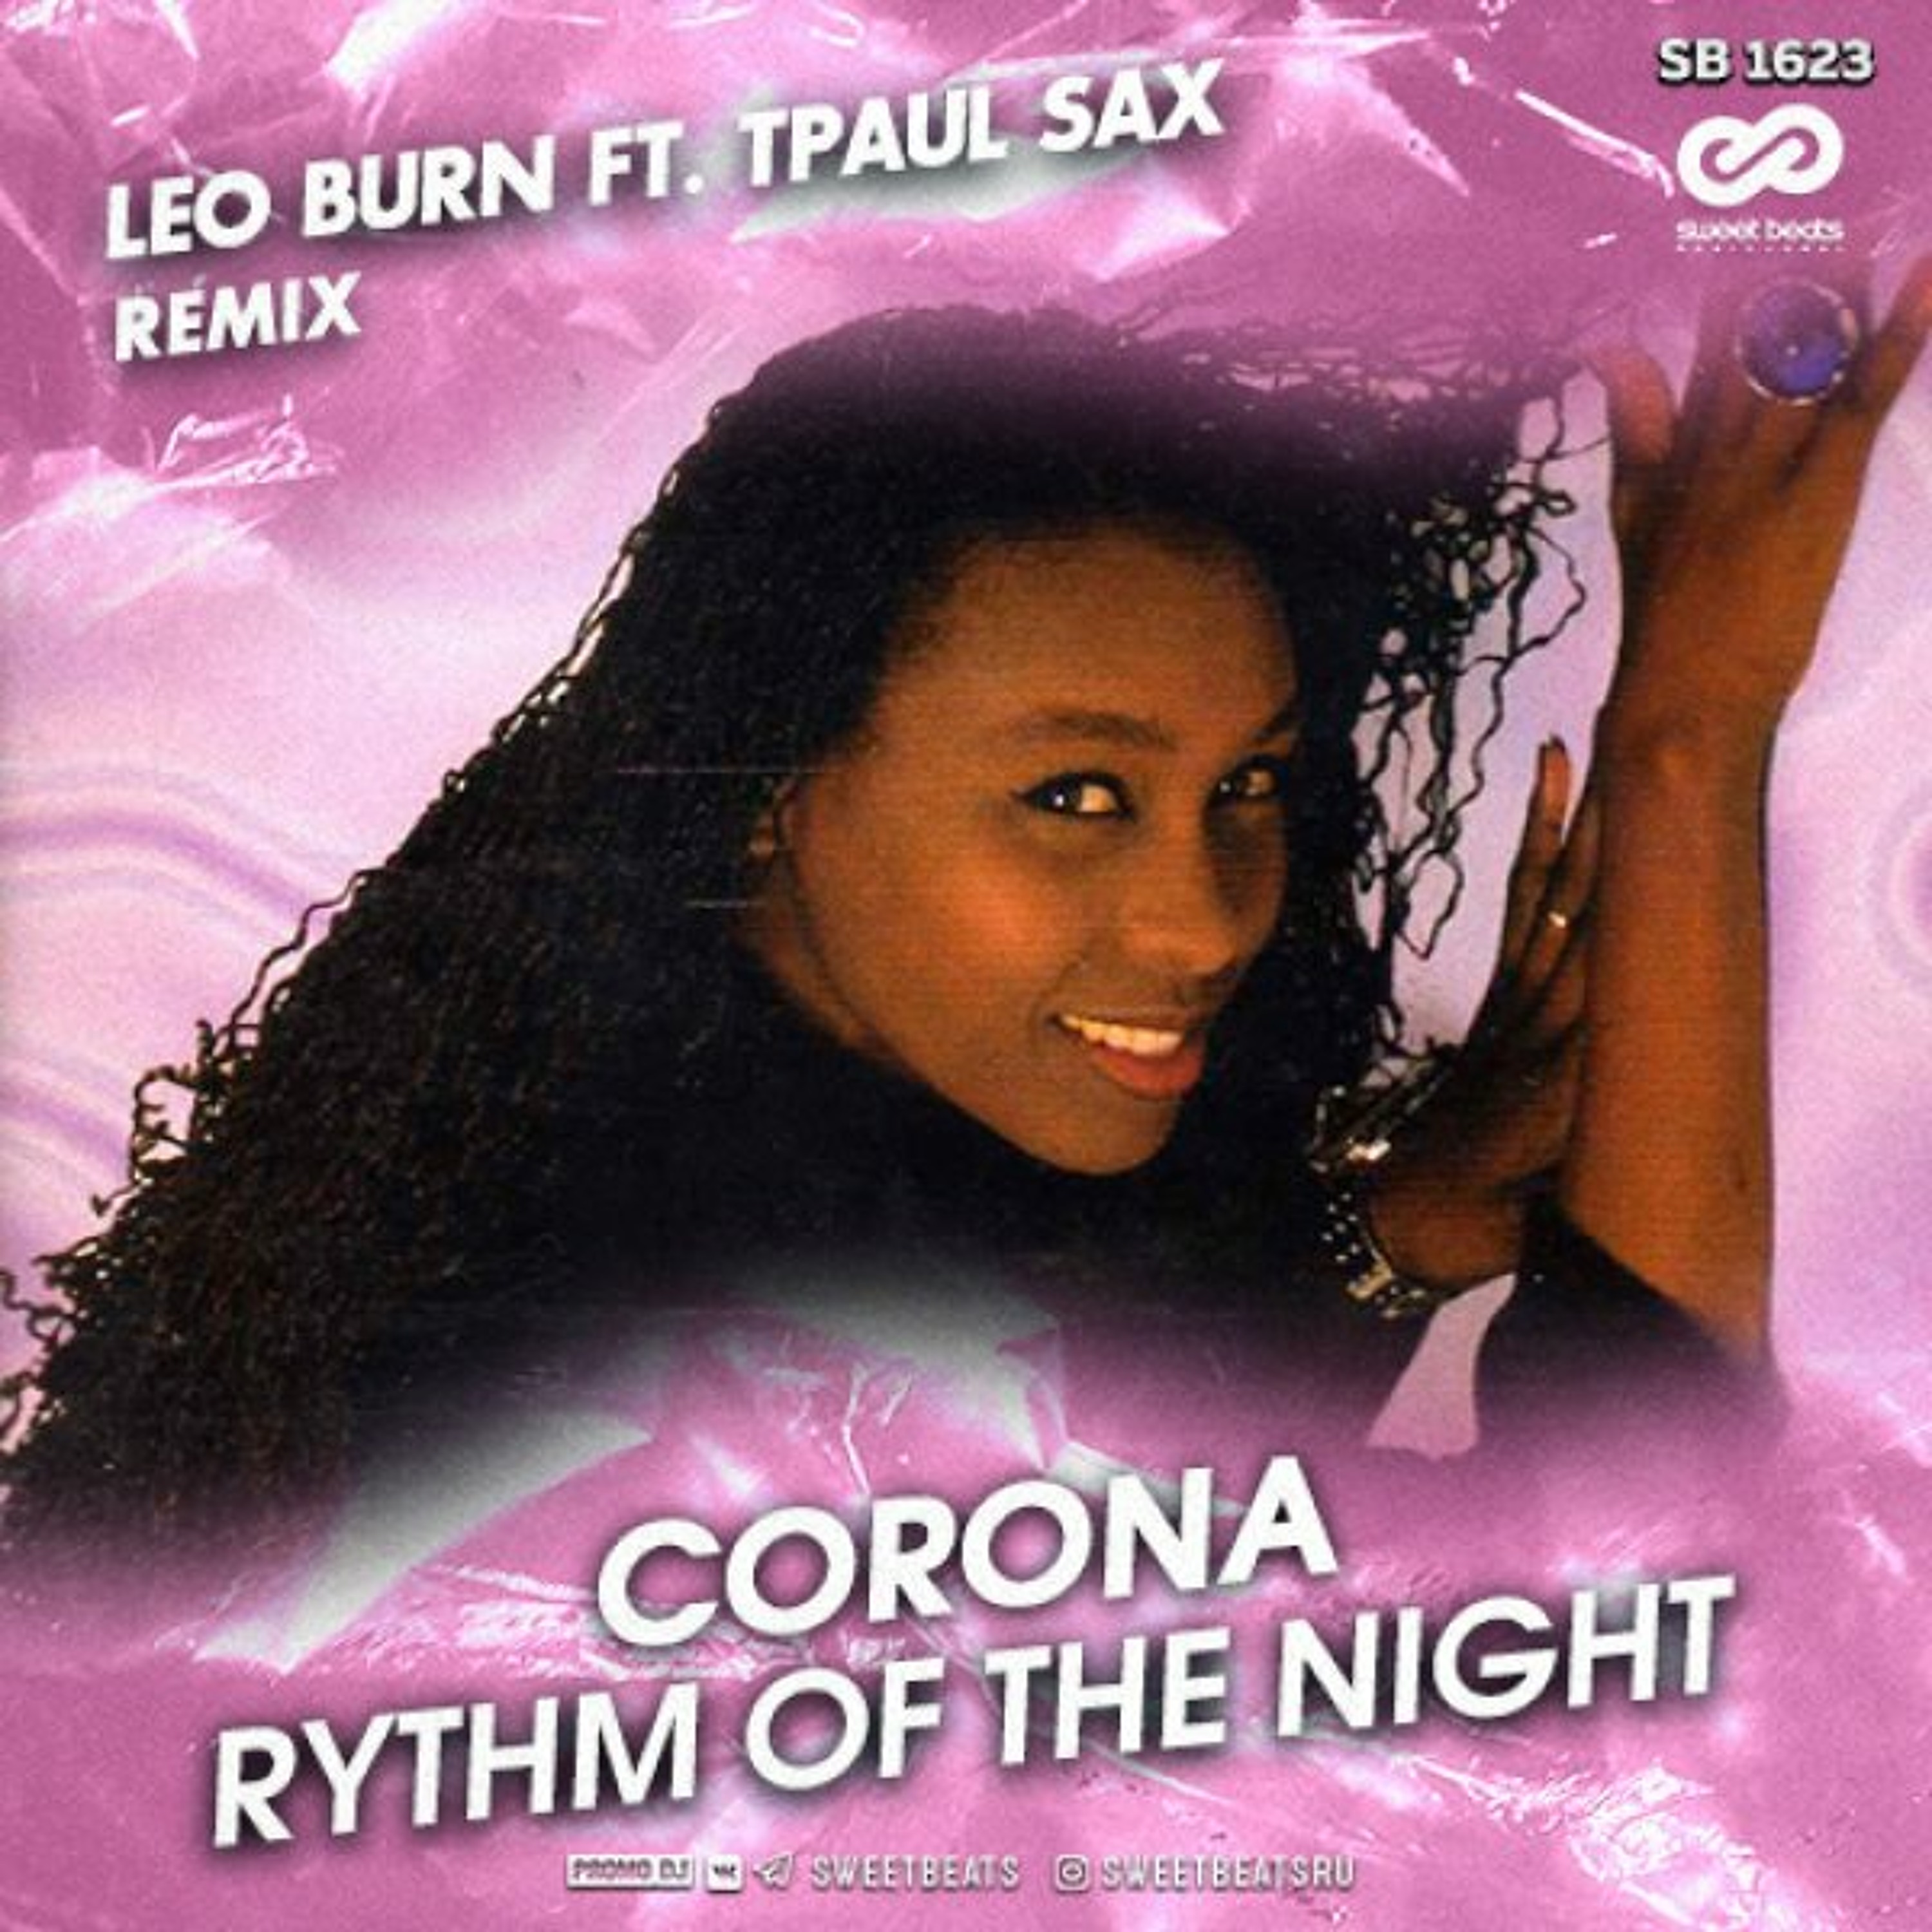 Corona rhythm of the night gta 5 фото 15